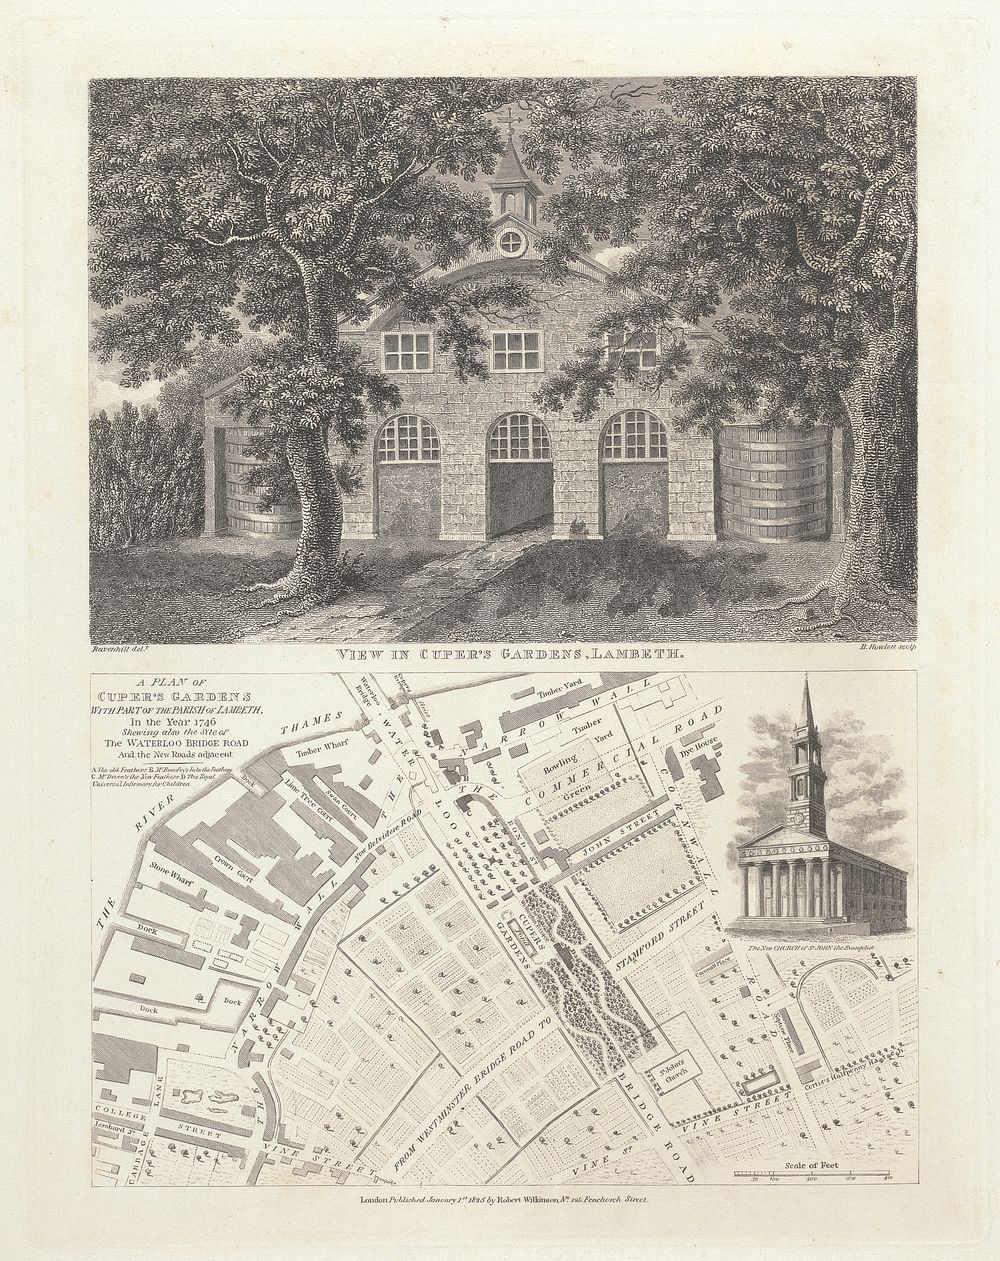 View in Cuper's Gardens, Lambeth